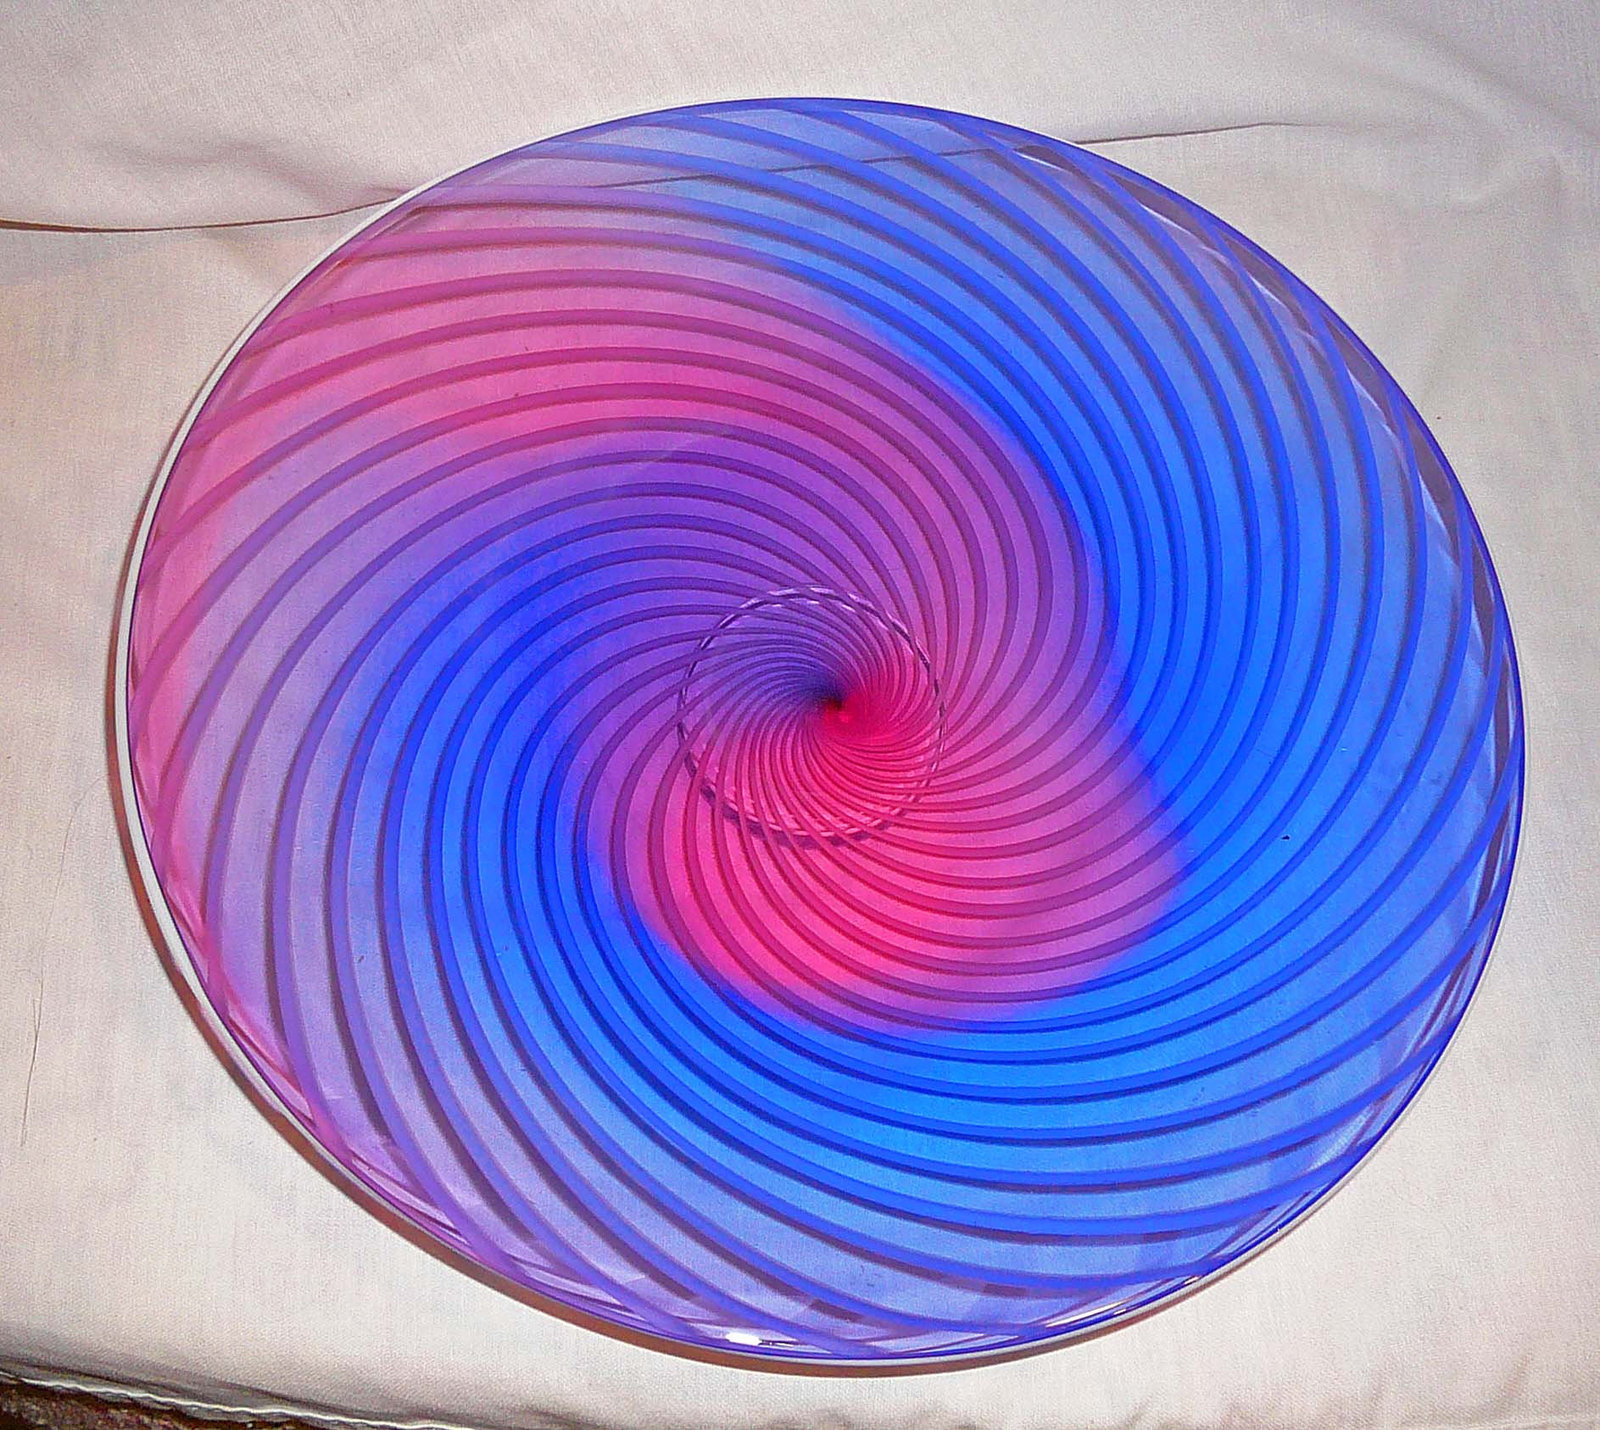 Primary image for Art Blown Glass Round Platter, Spiral Designed Art Deco Plate, Serving Platter